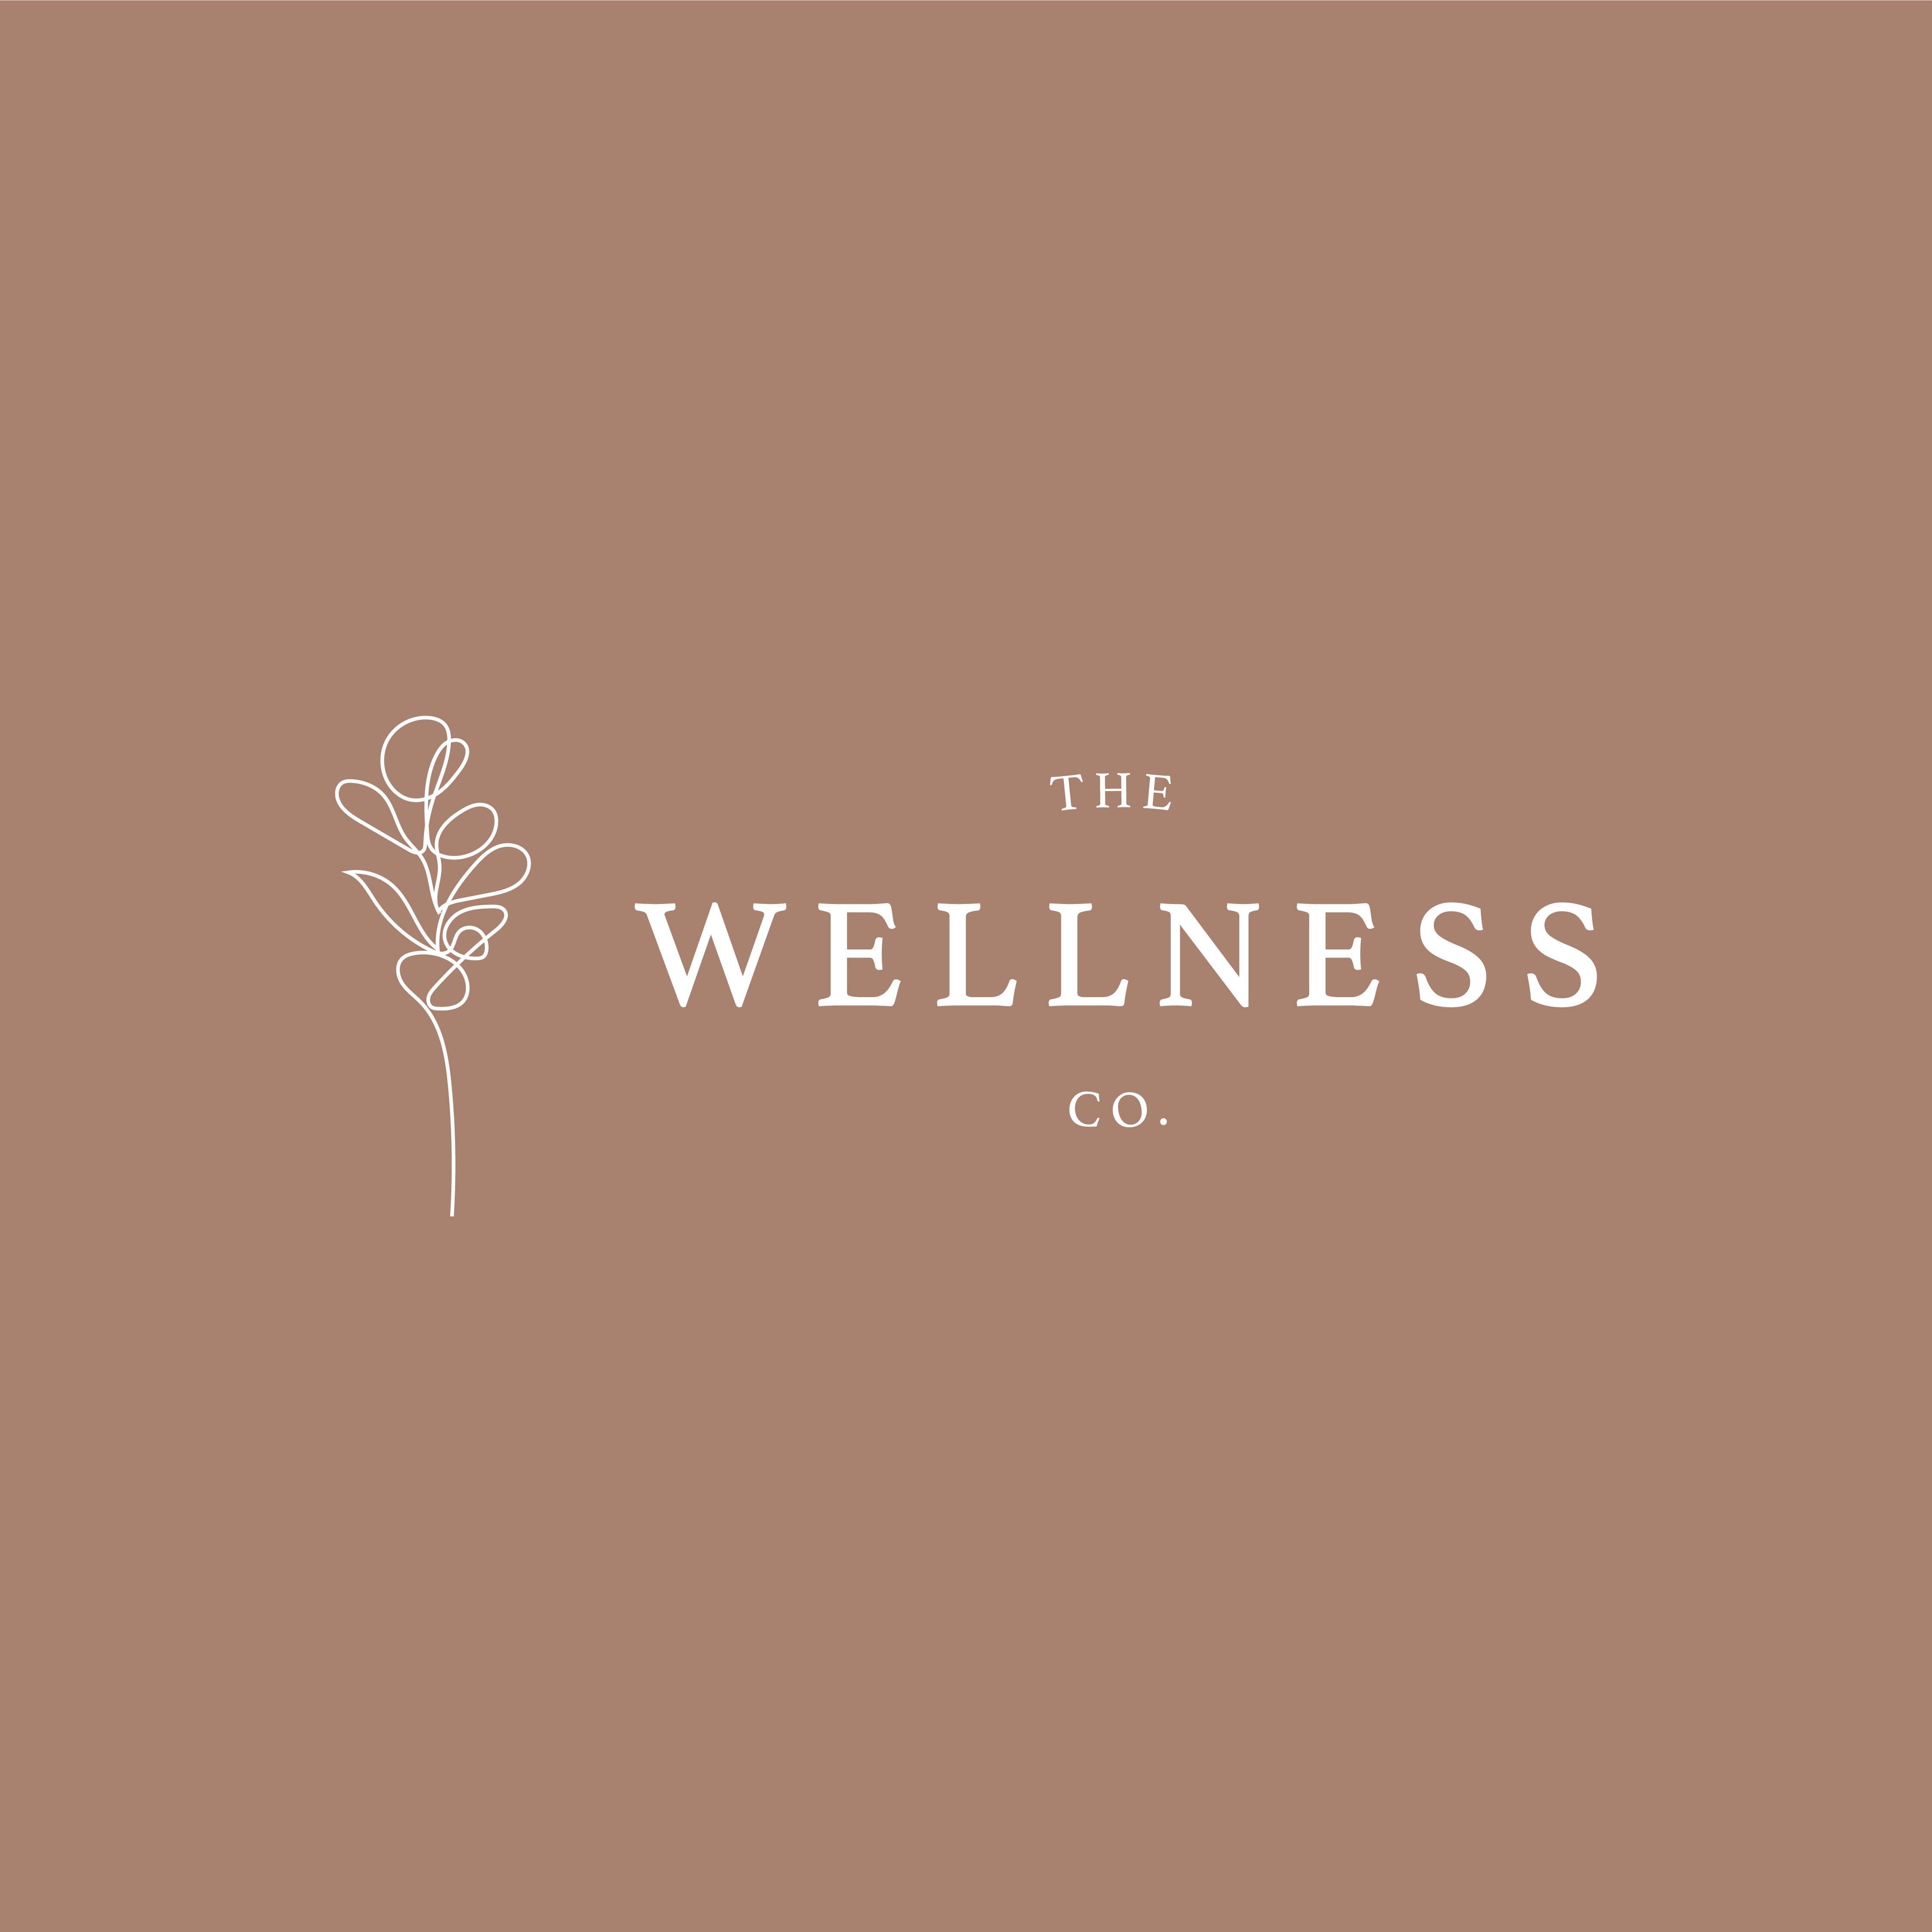 The Wellness Co